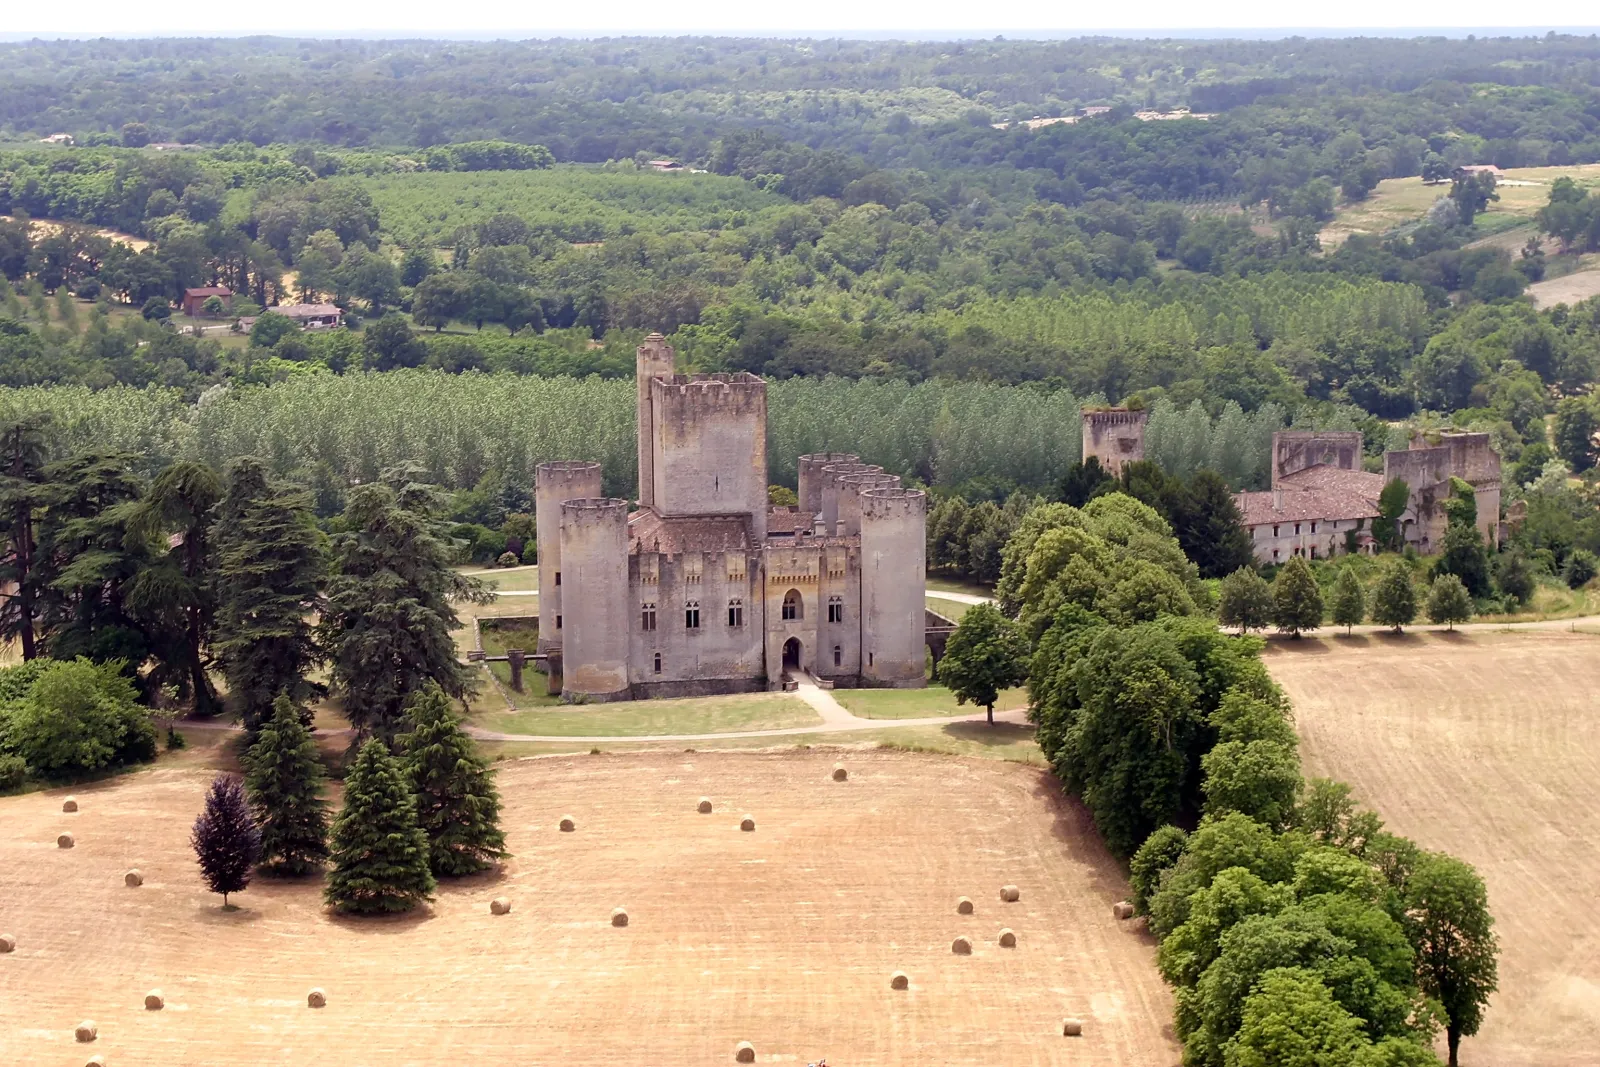 Château de Roquetaillade - Wikipedia